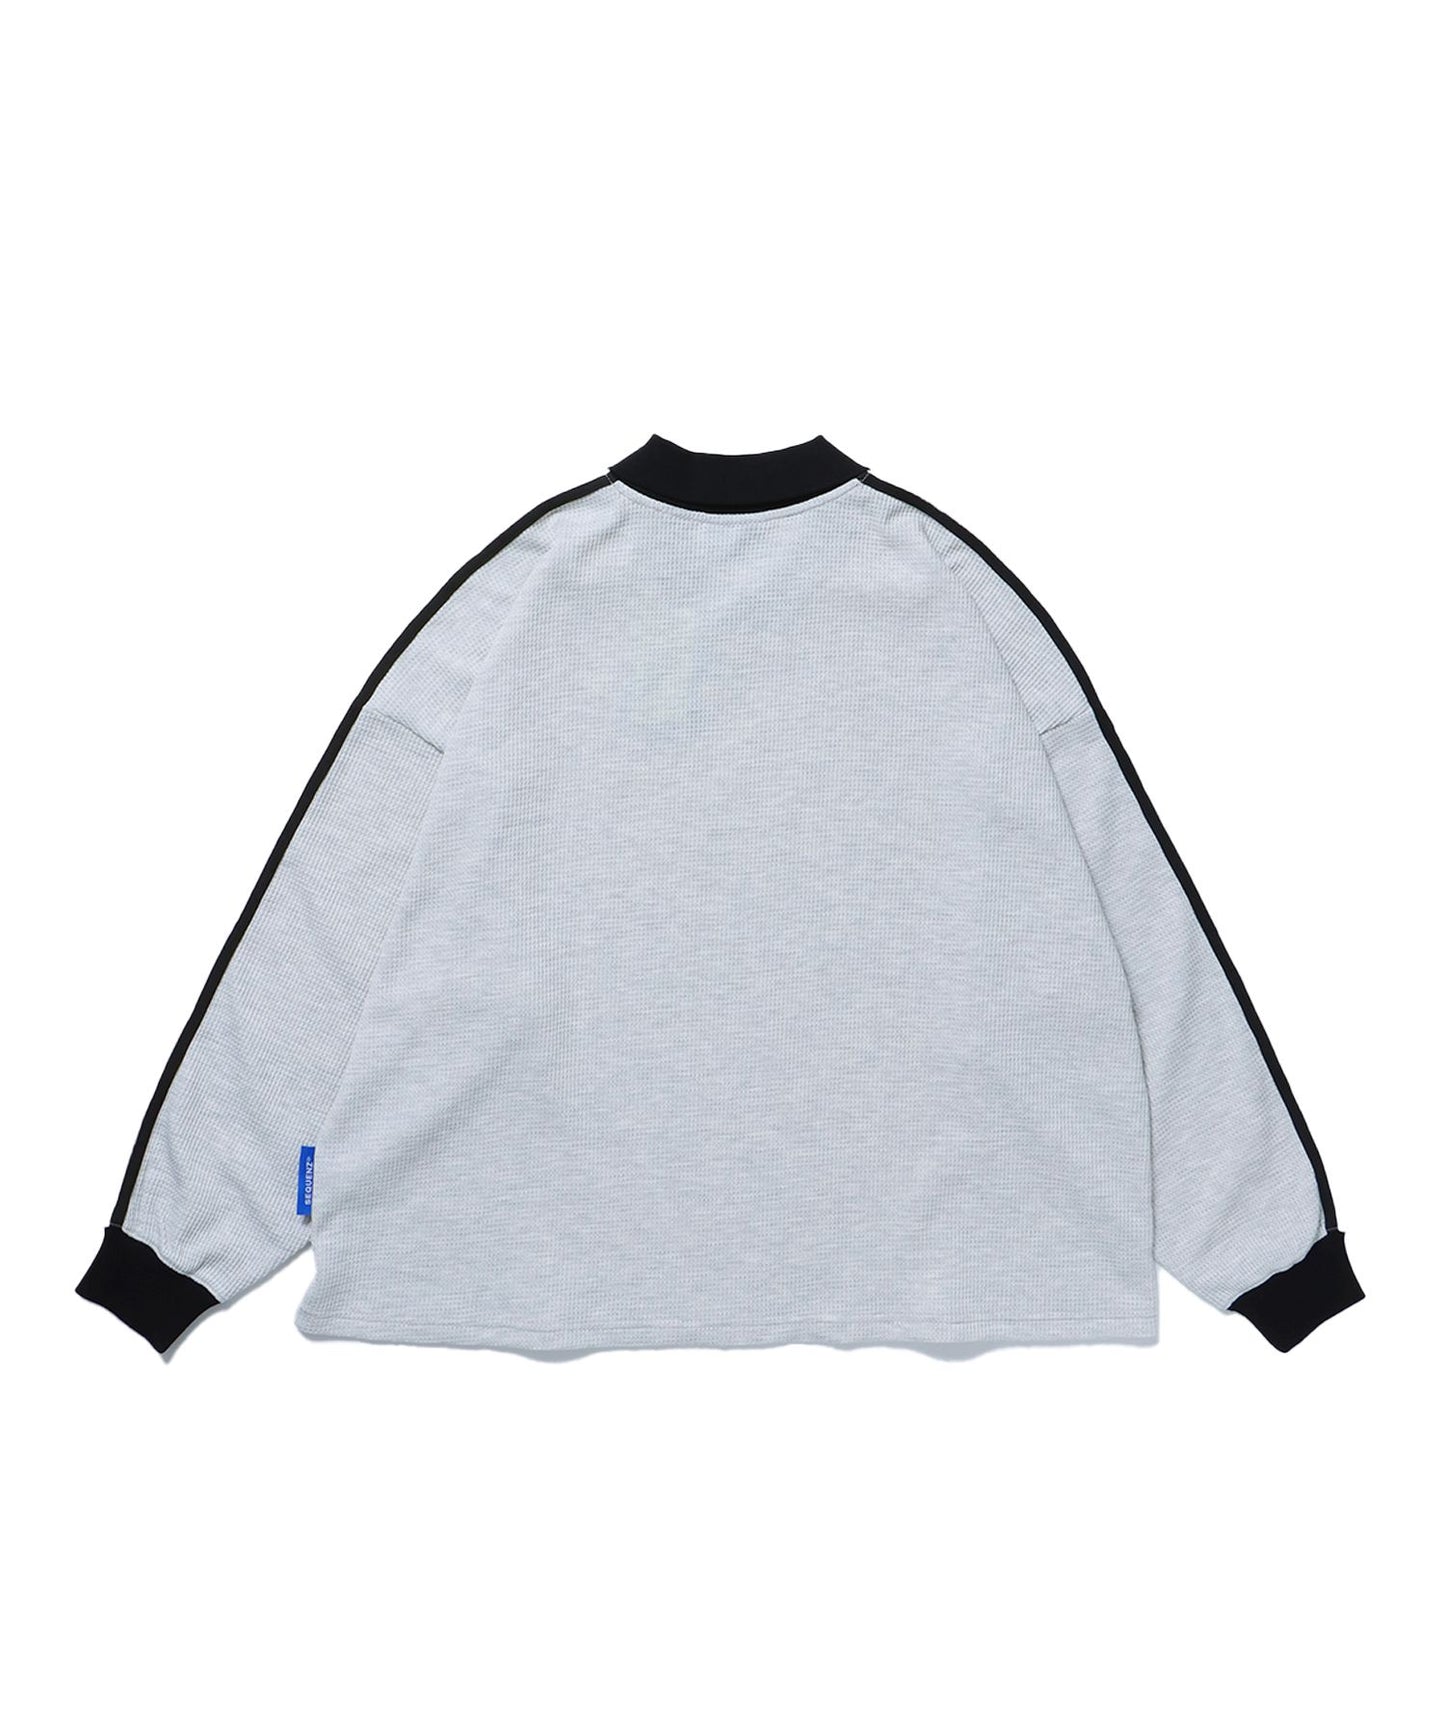 【SEQUENZ】 配色 オーバーサイズ ゲームシャツ サイドライン アイボリー